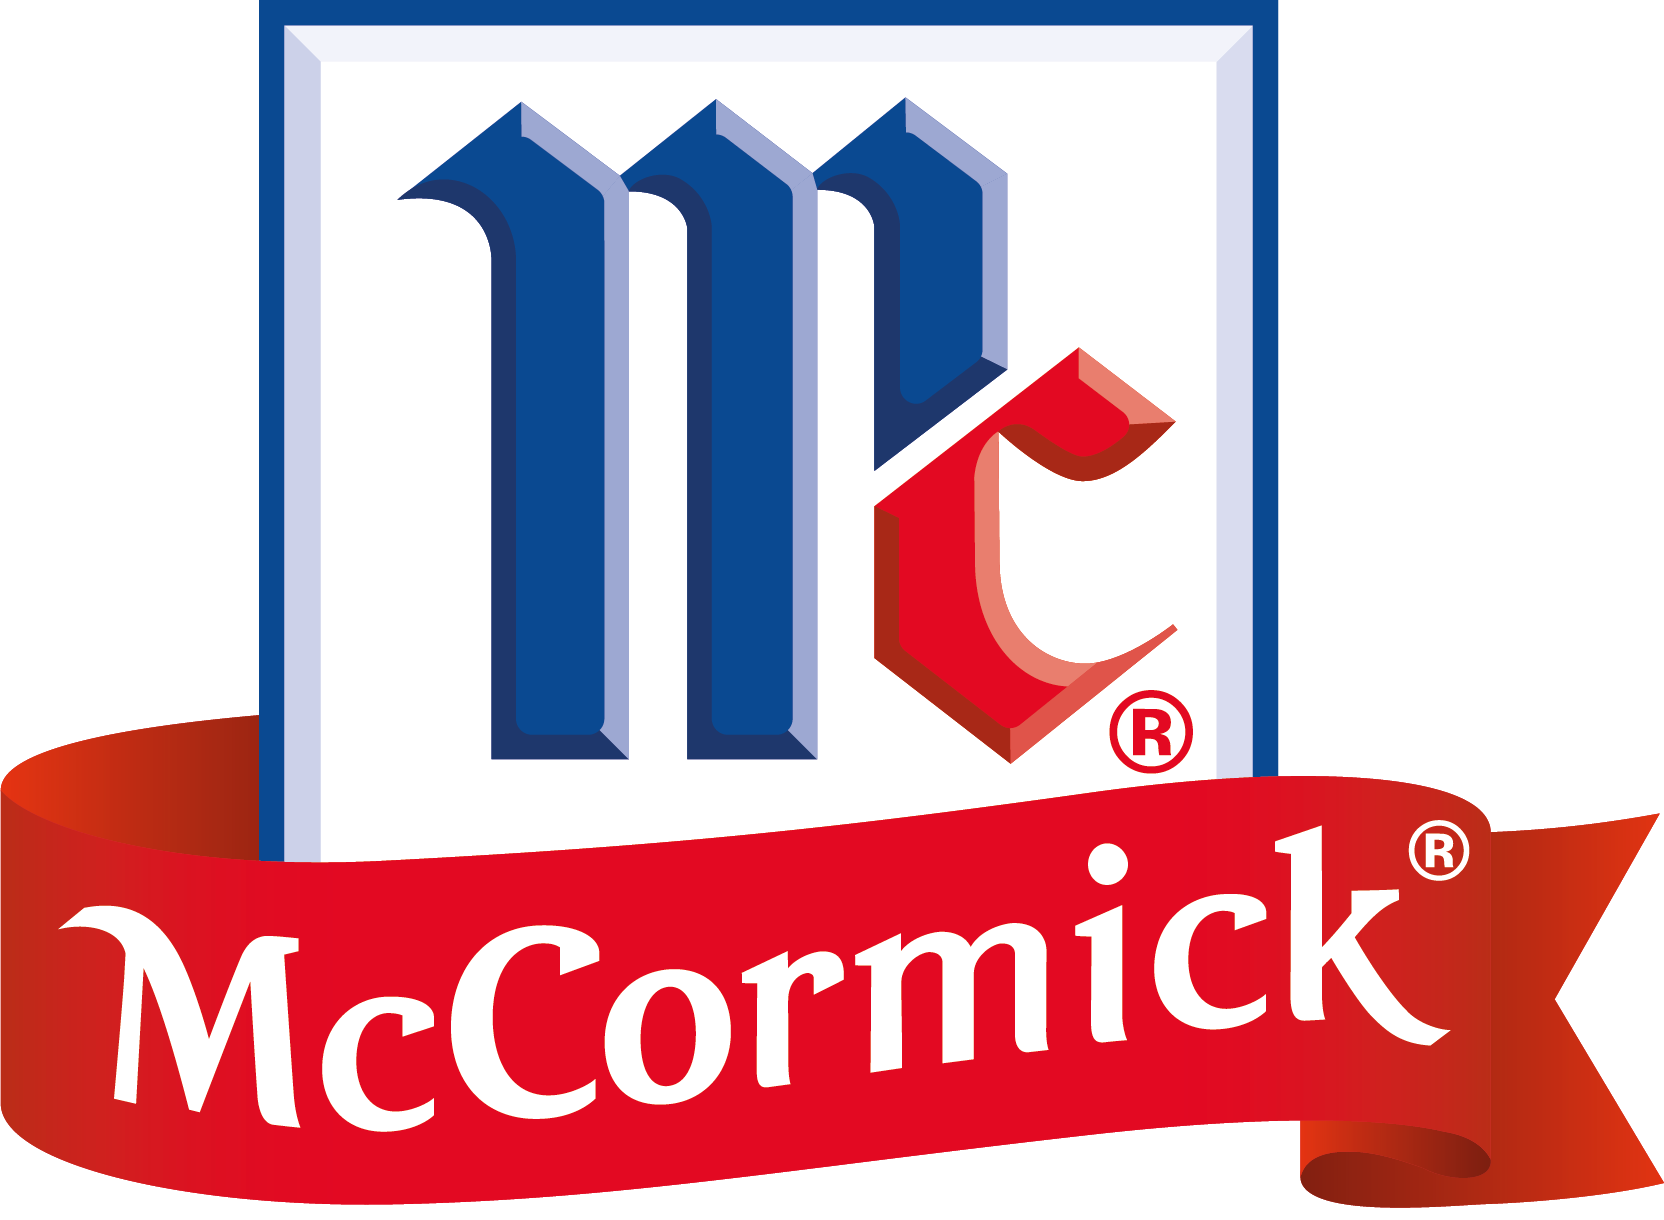 McCormick-logo